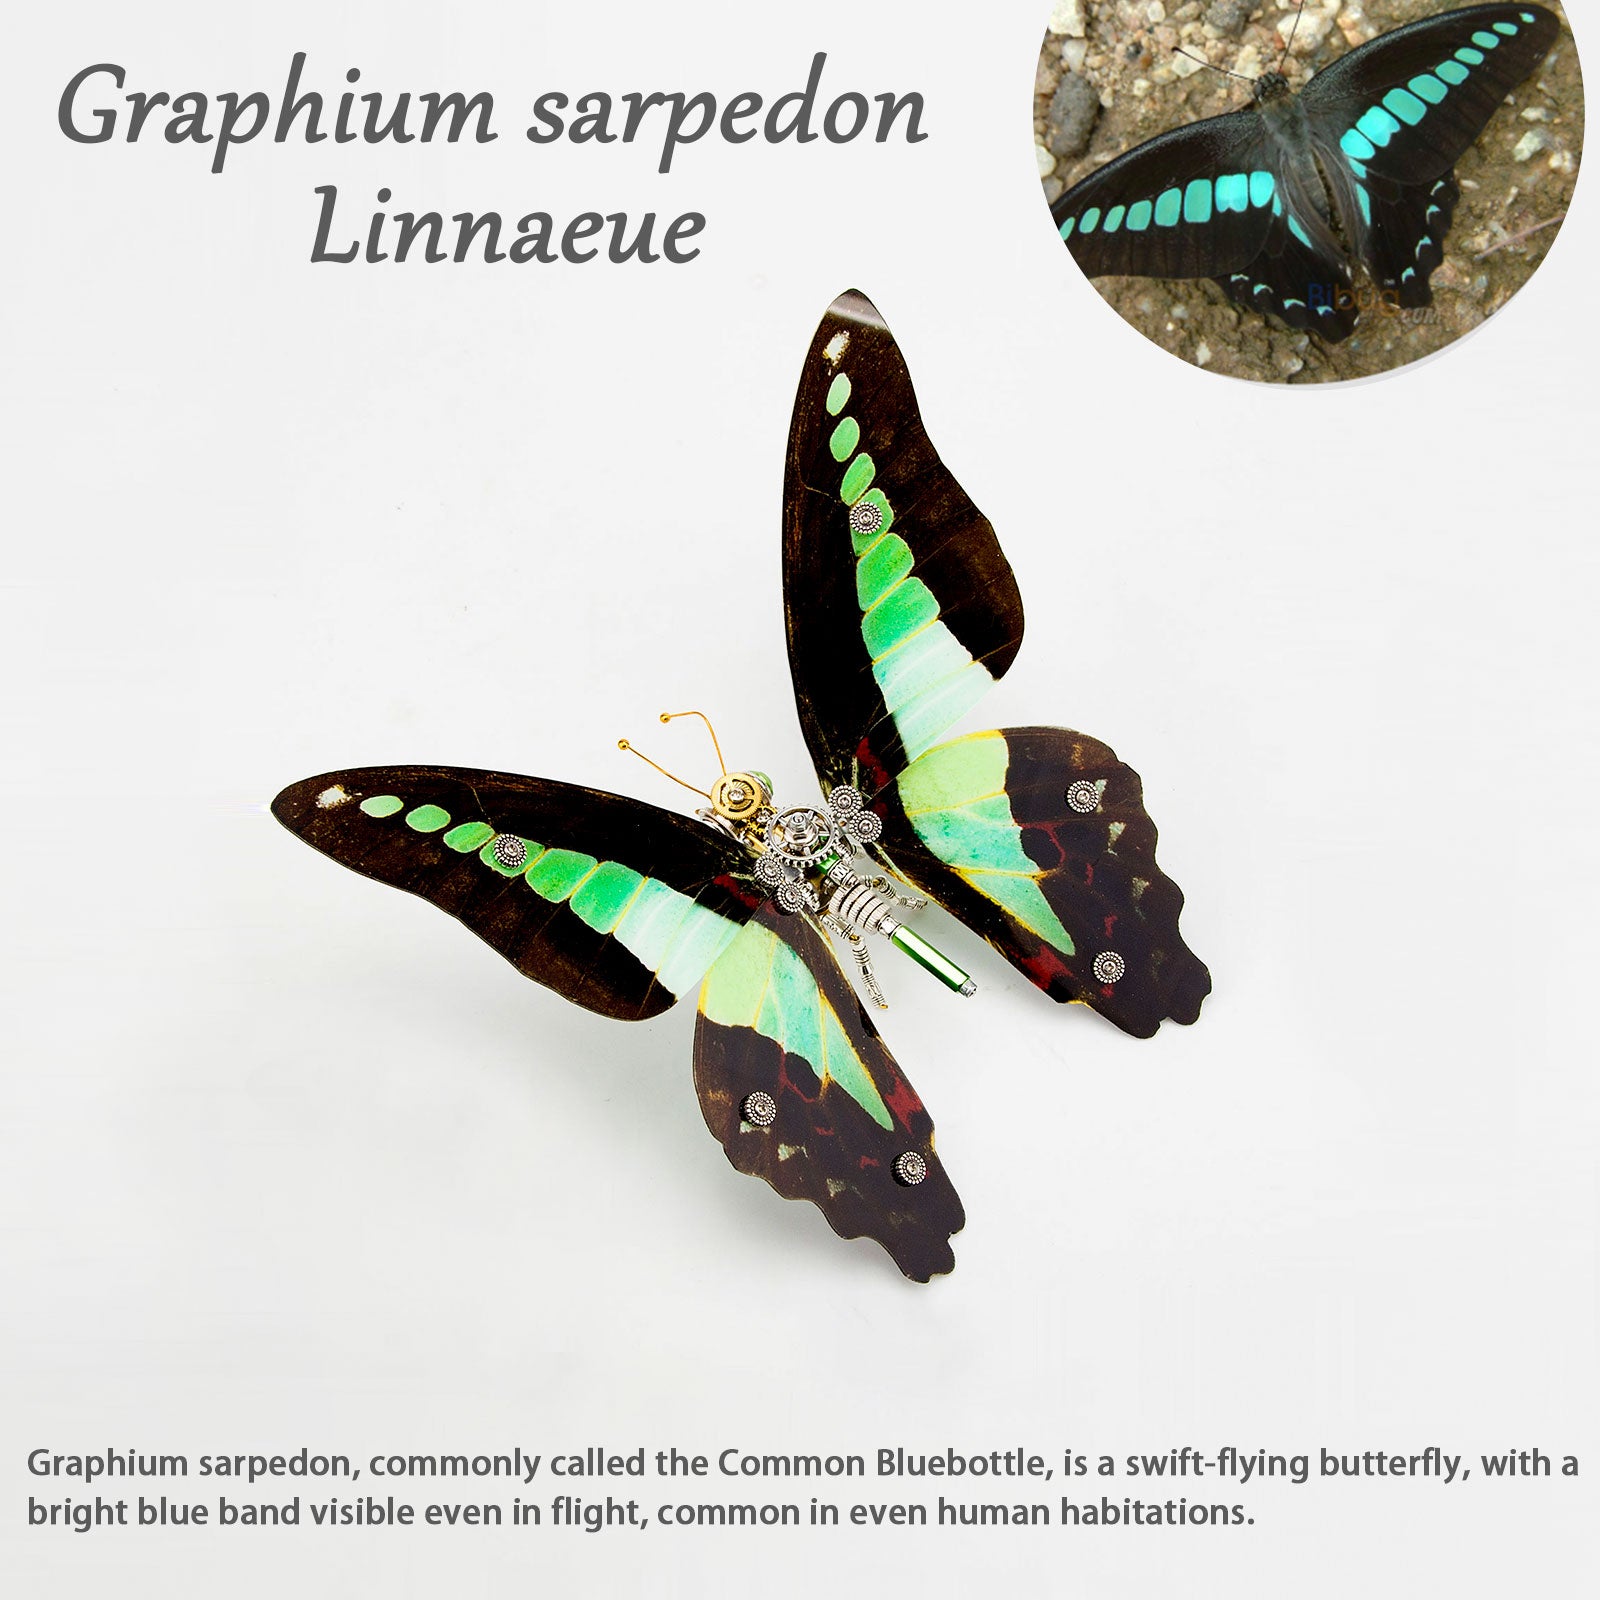 150PCS+ Steampunk 3D Metal Graphium Sarpedon Linnaeue Model DIY Kits